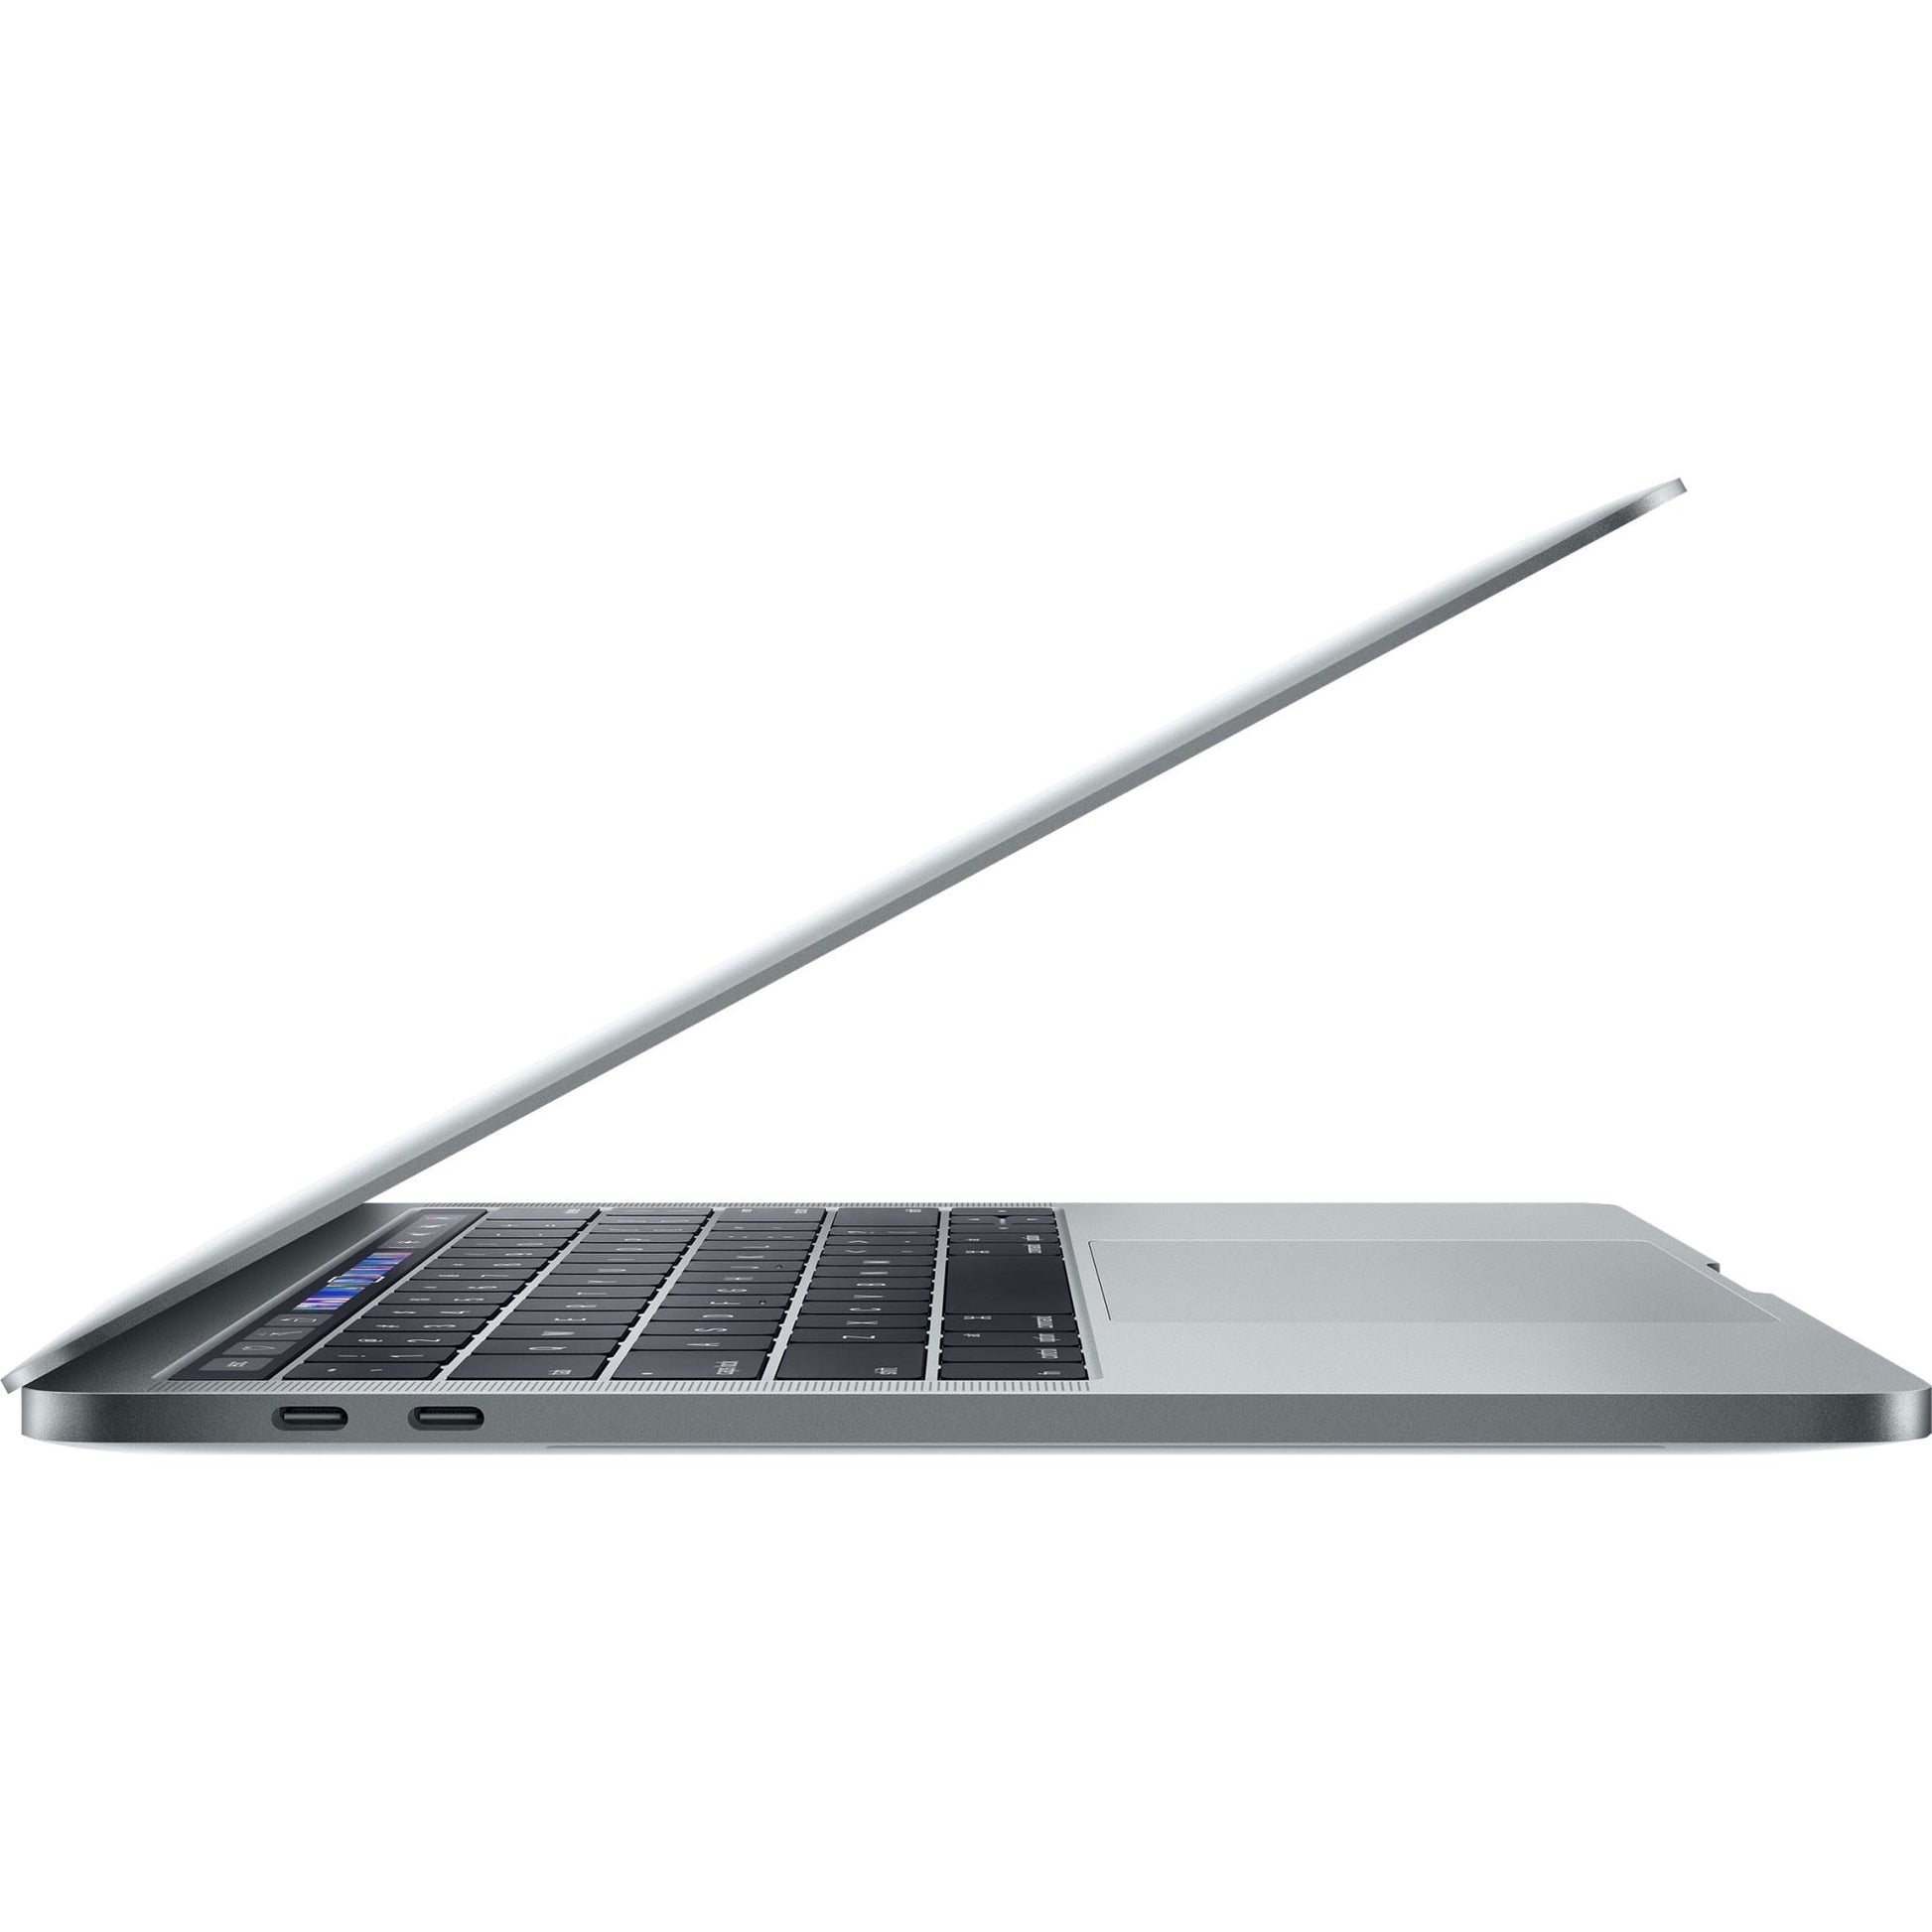 Apple Macbook Pro 13" 2018 Refurbished Core i7 2.7Ghz - refurbished